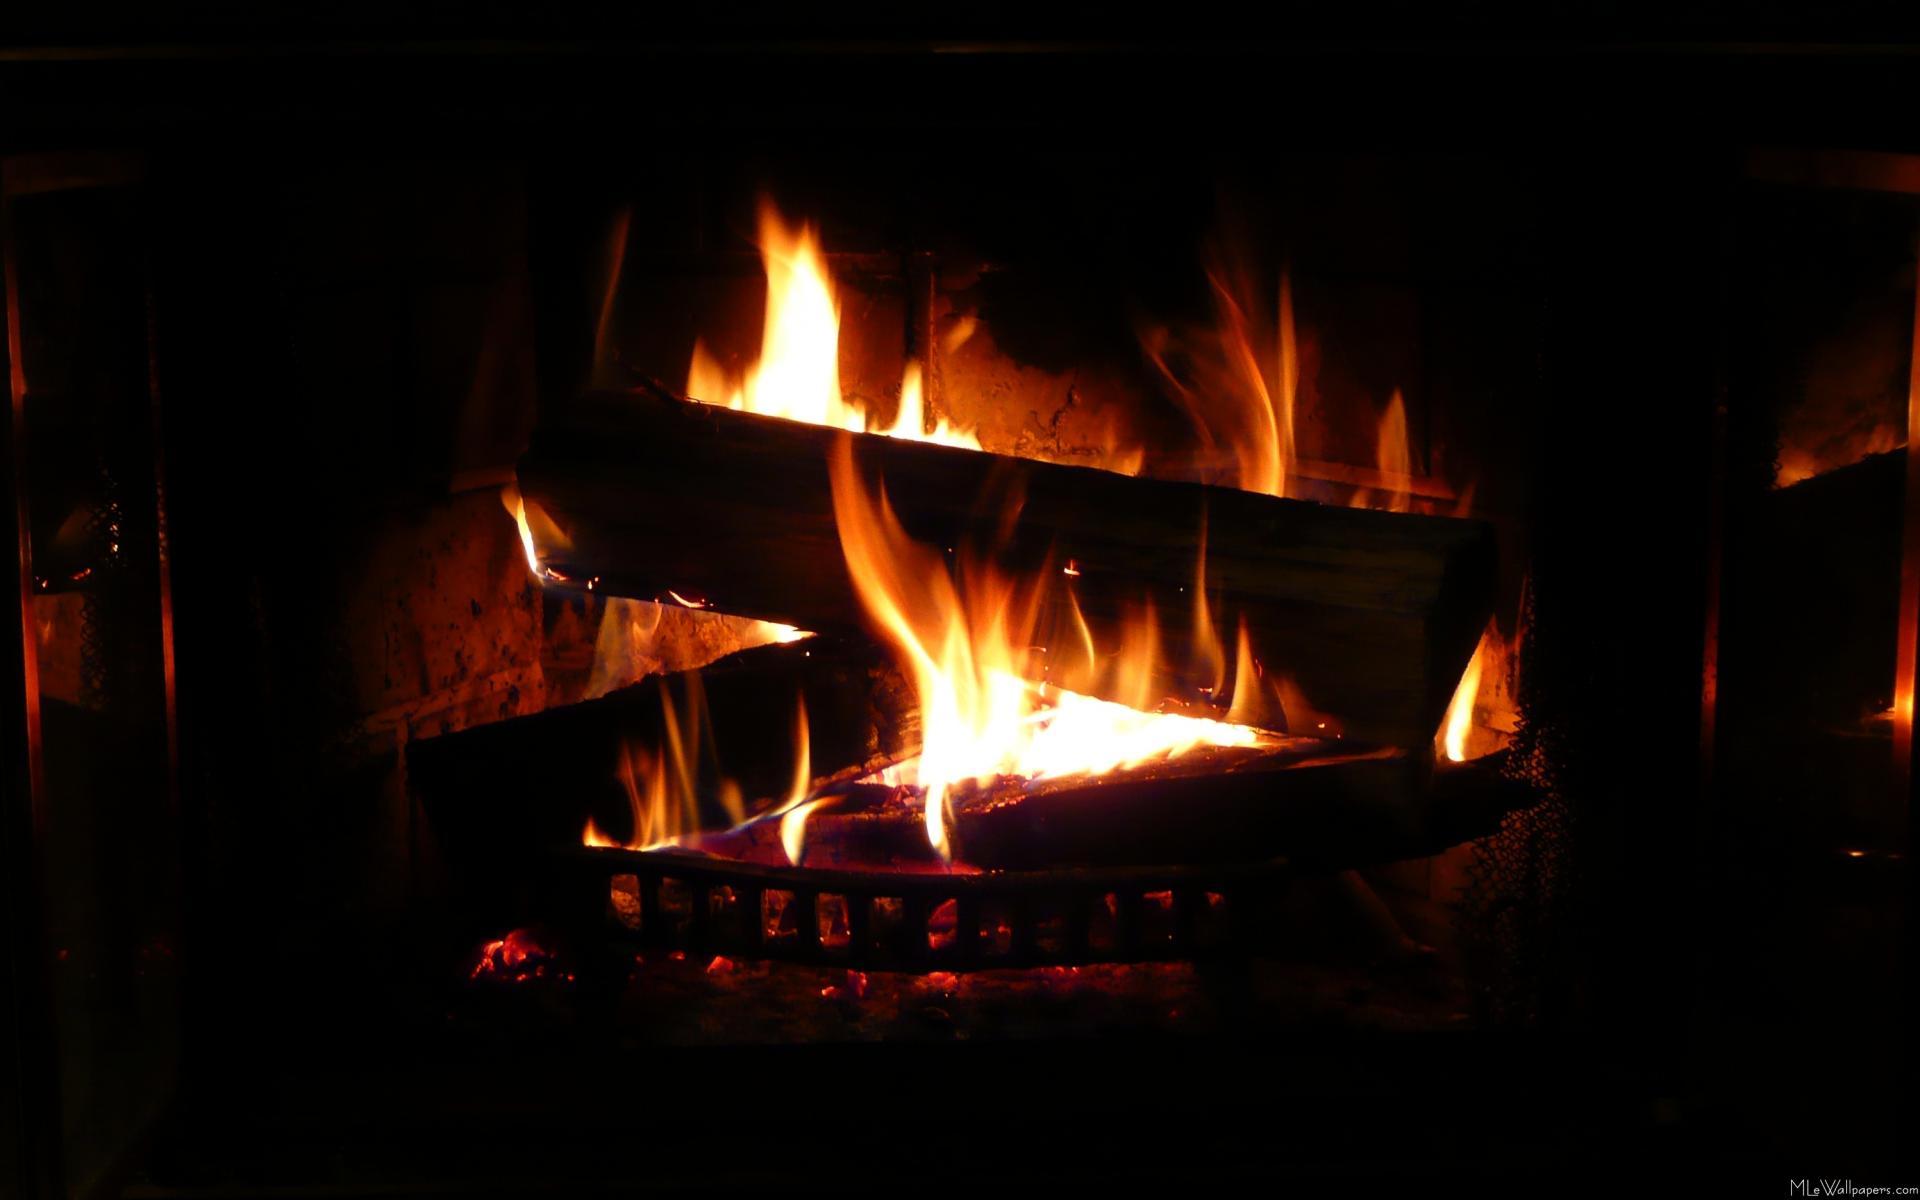 fireplace screensaver windows 8.1 free download